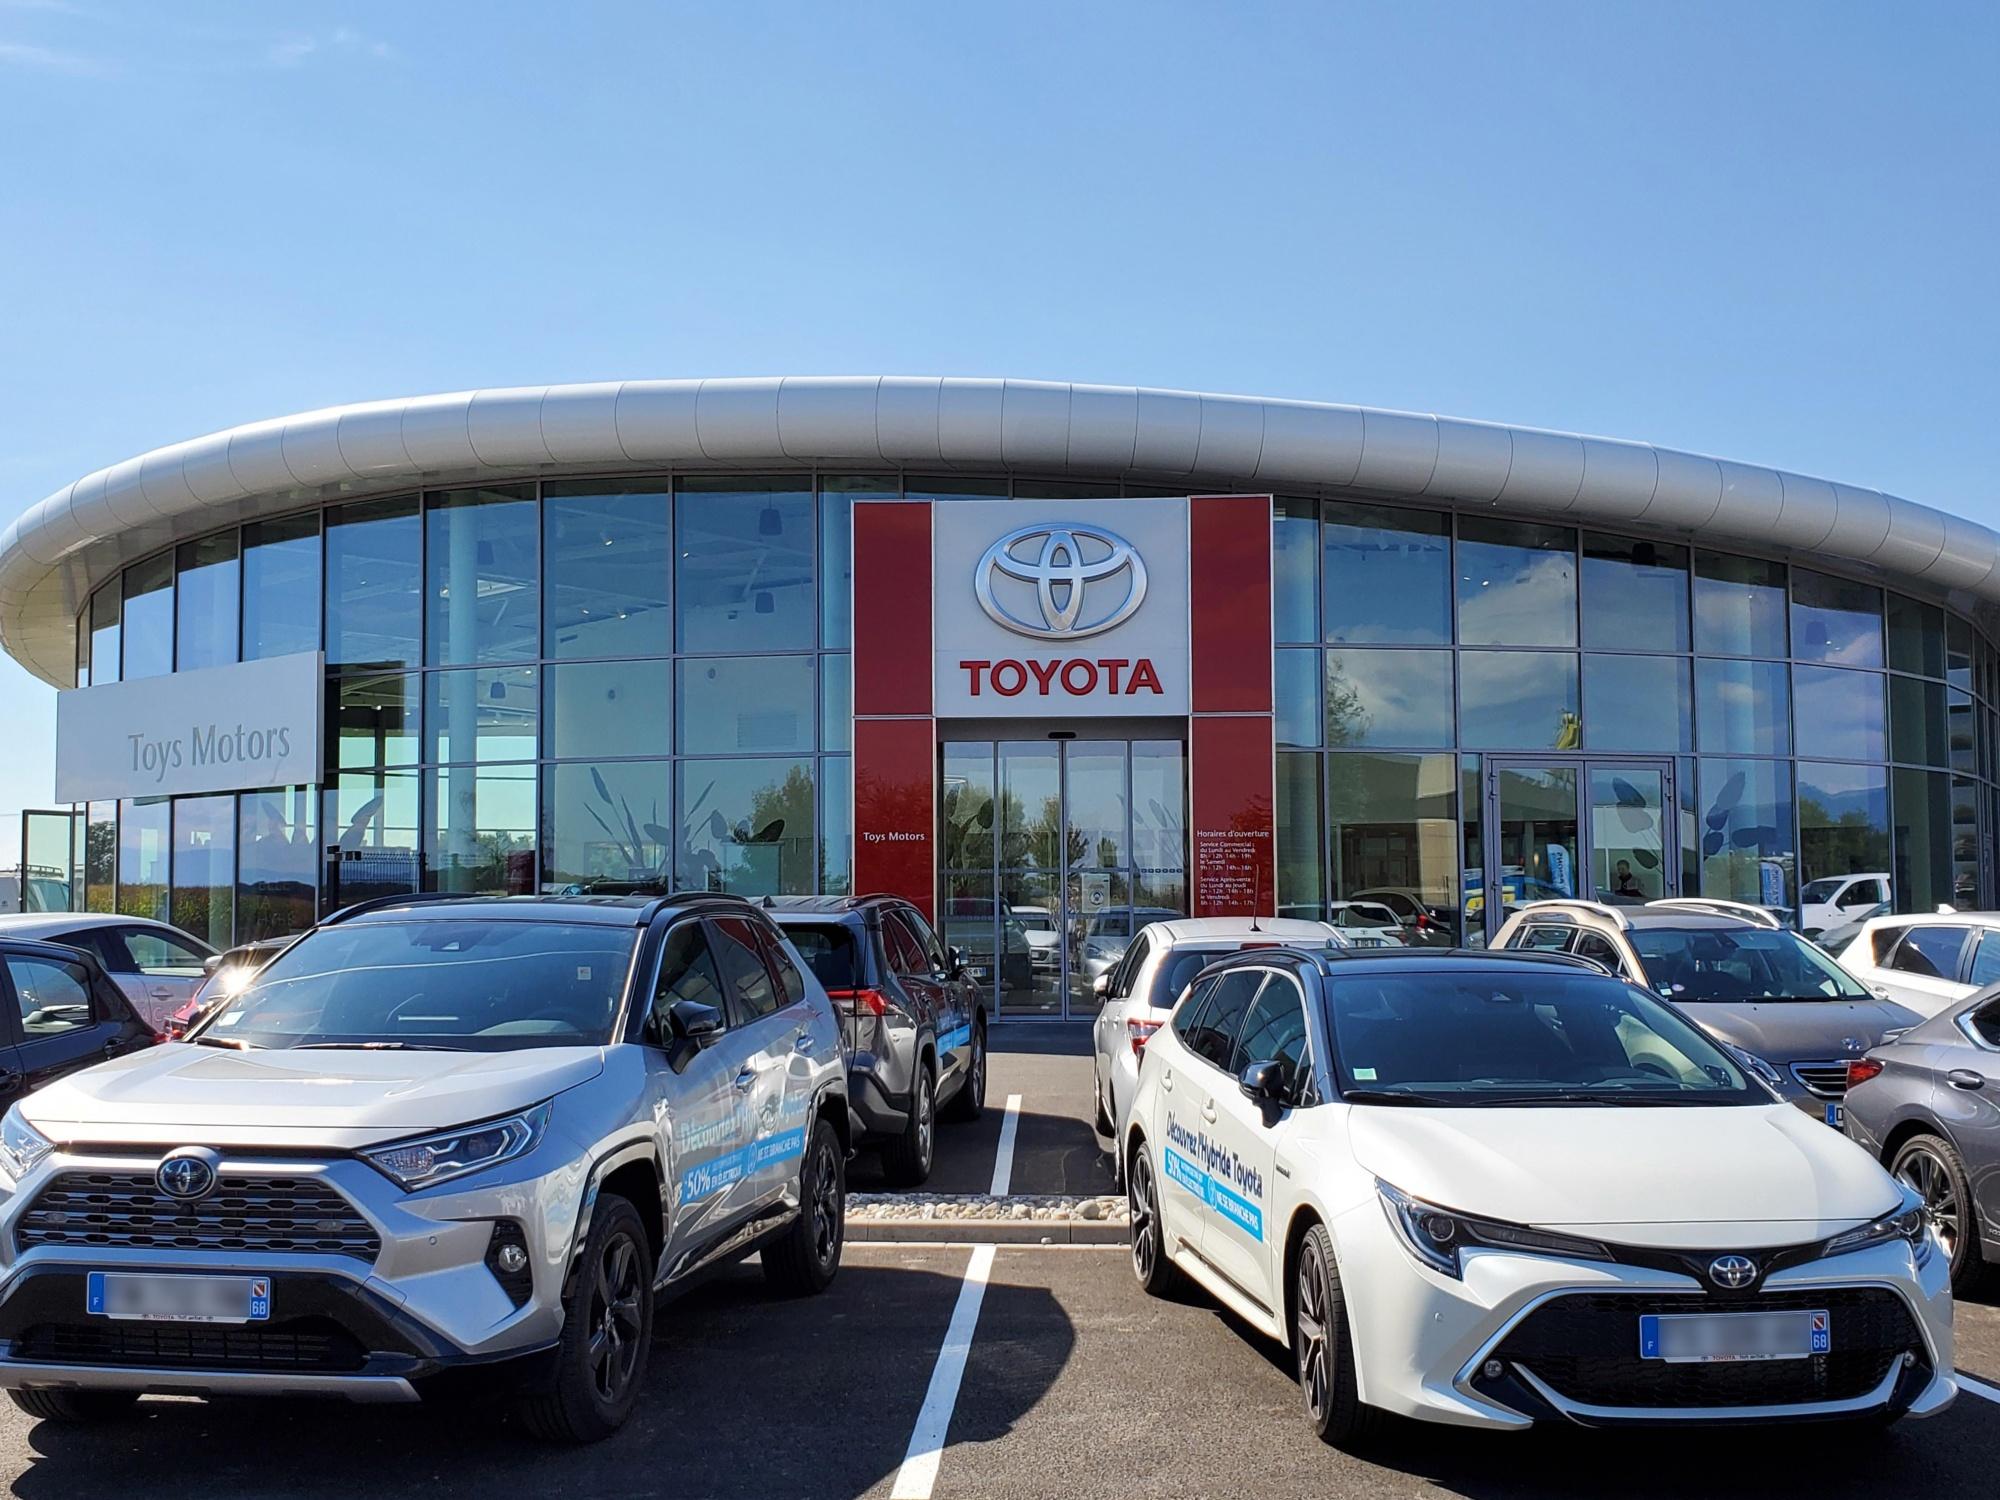 Toyota - Toys Motors - Colmar     Horbourg Wihr